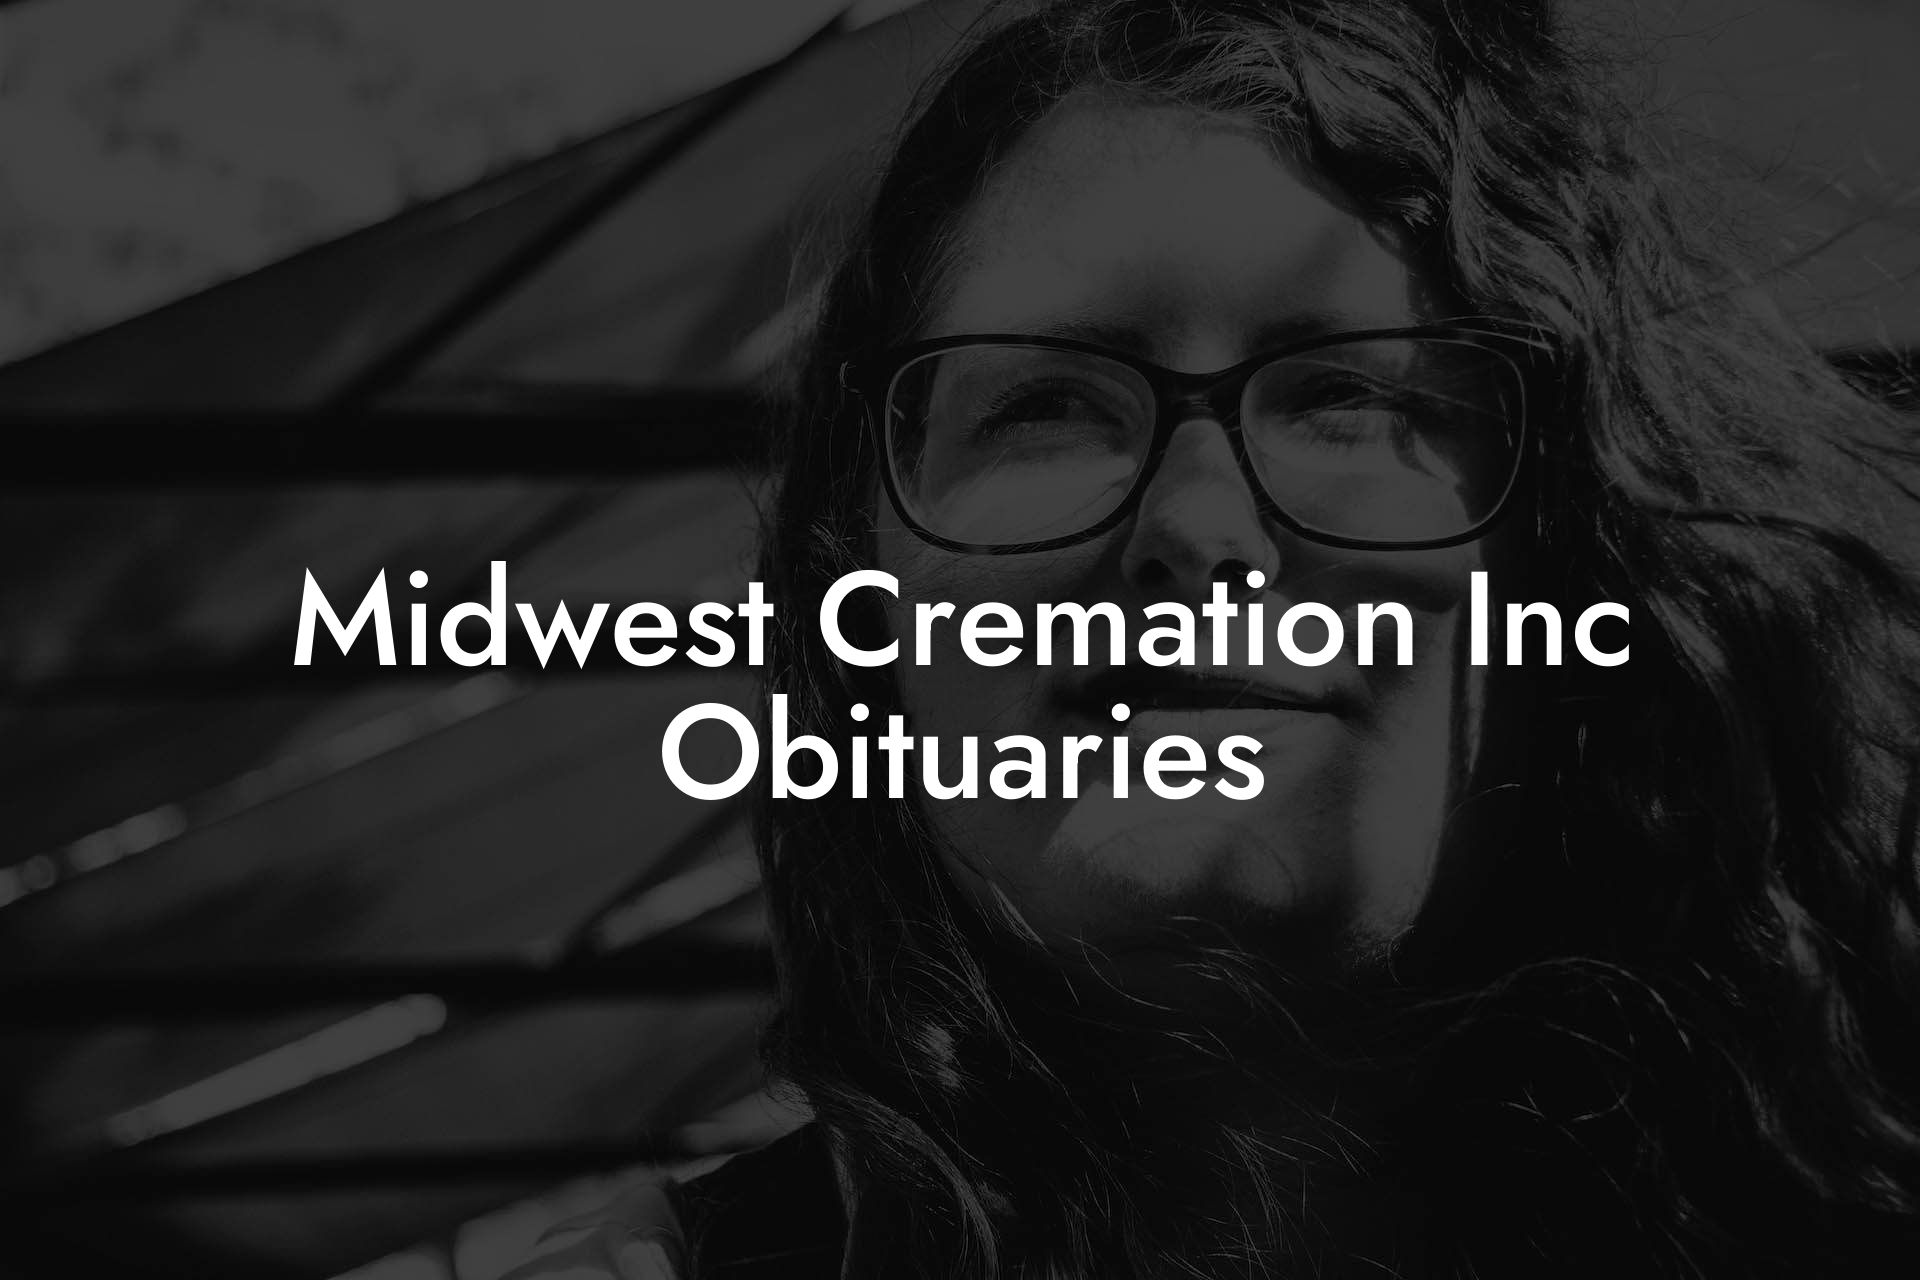 Midwest Cremation Inc Obituaries